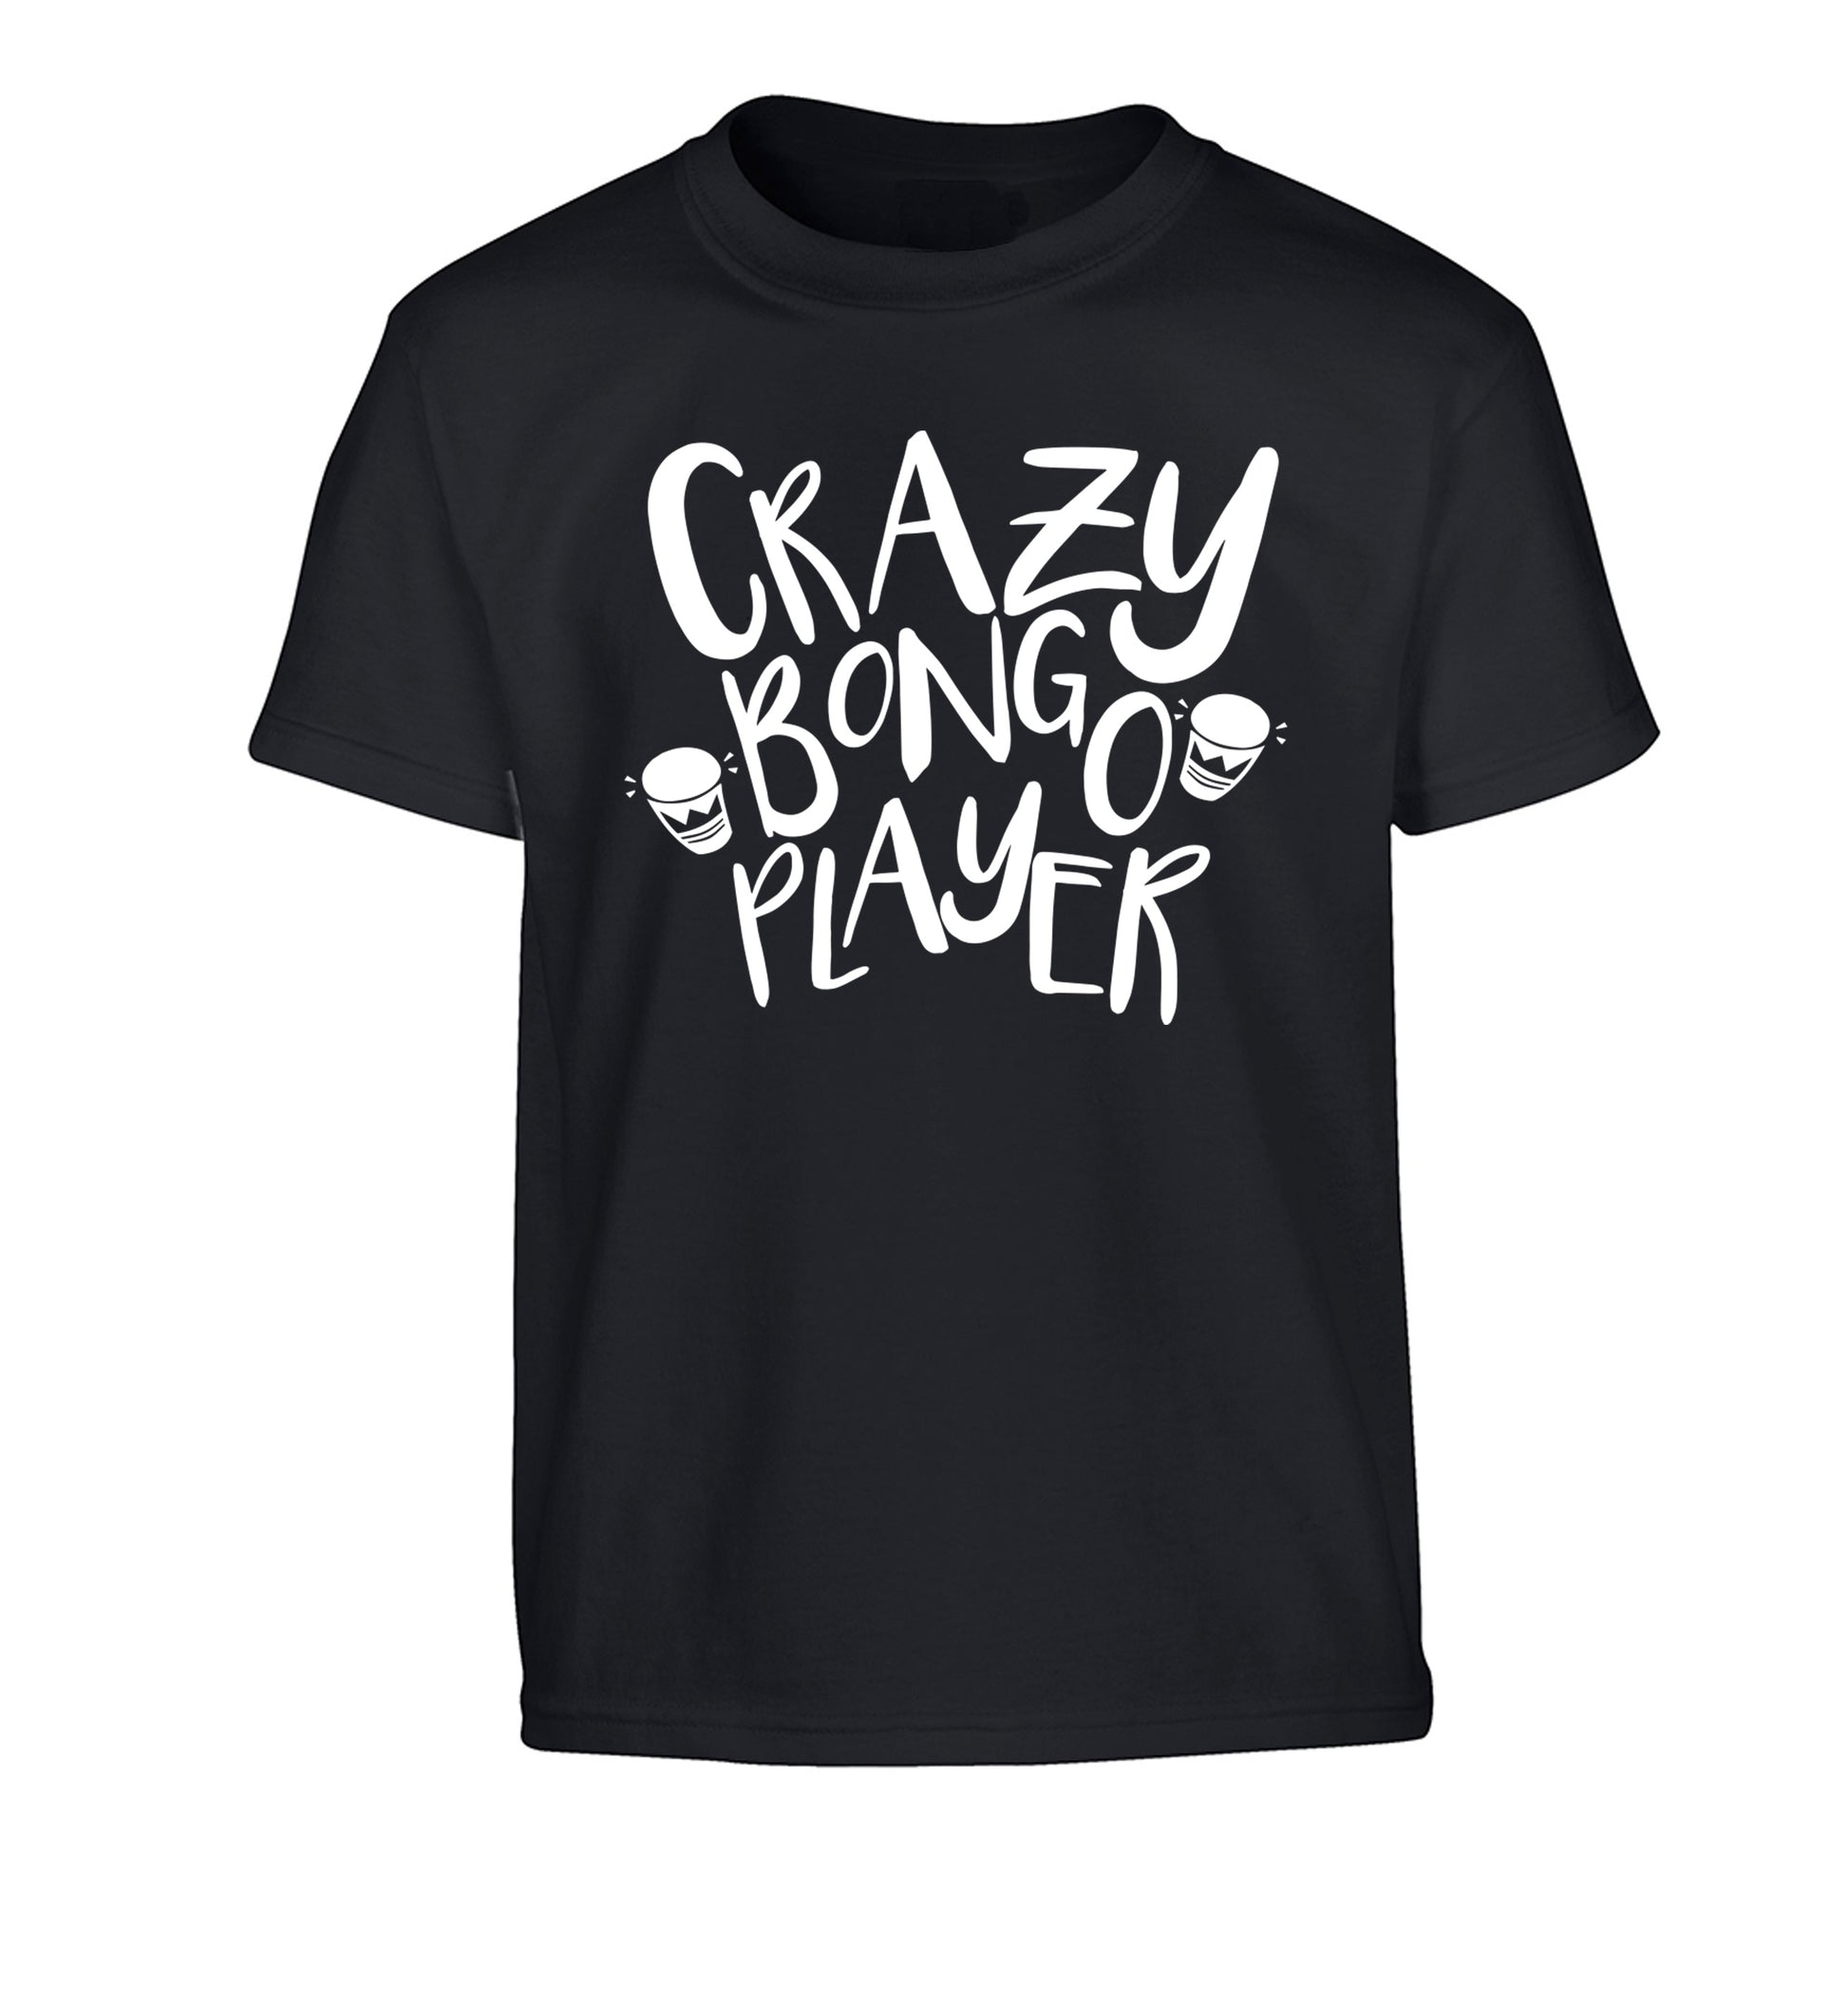 Crazy bongo player Children's black Tshirt 12-14 Years